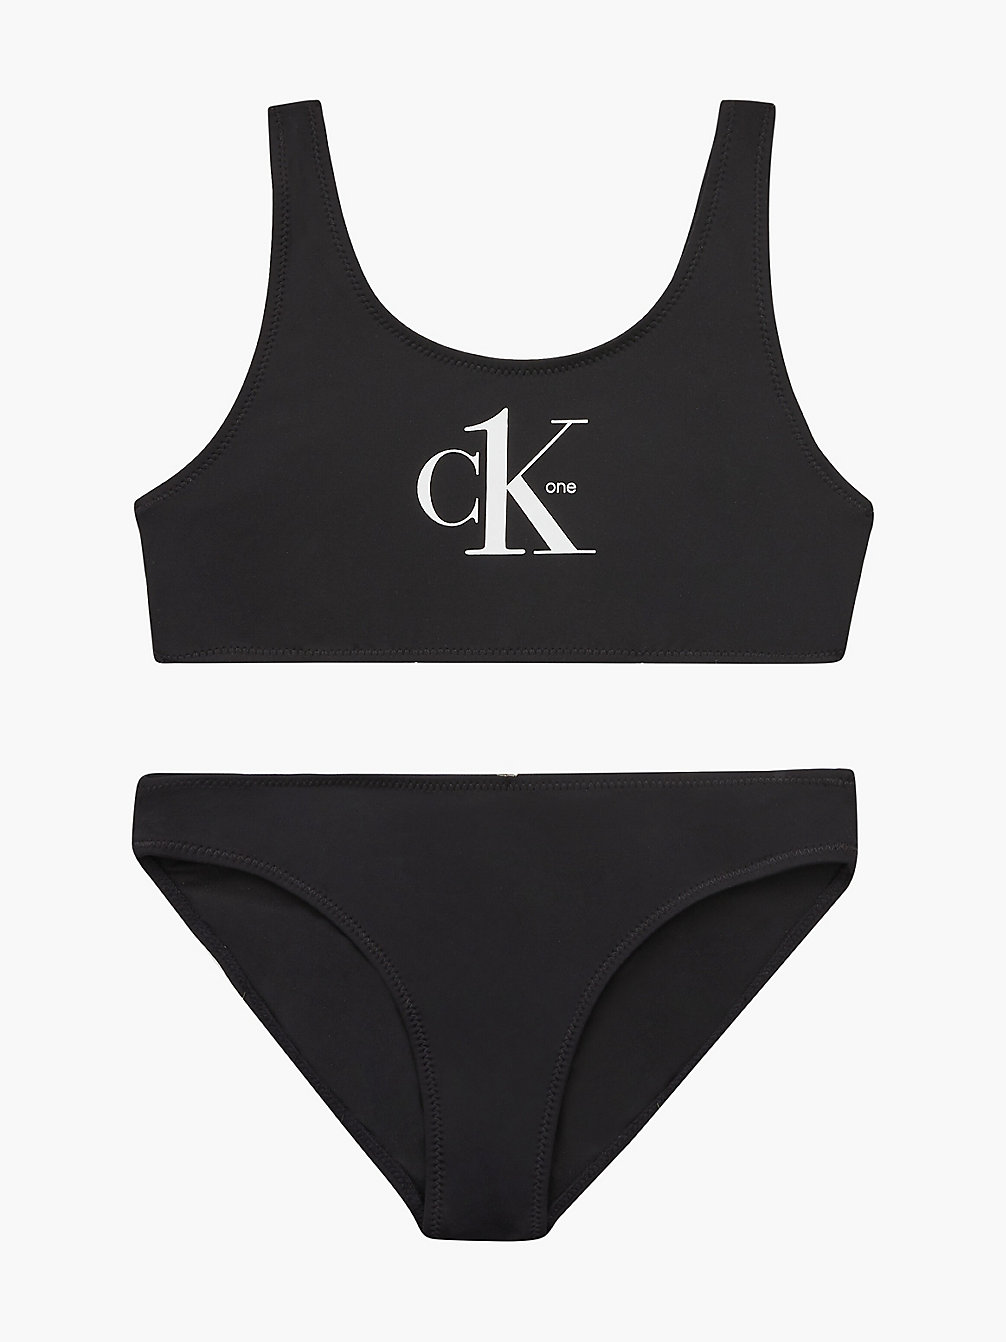 PVH BLACK > Meisjesbralette Bikini - CK One > undefined girls - Calvin Klein